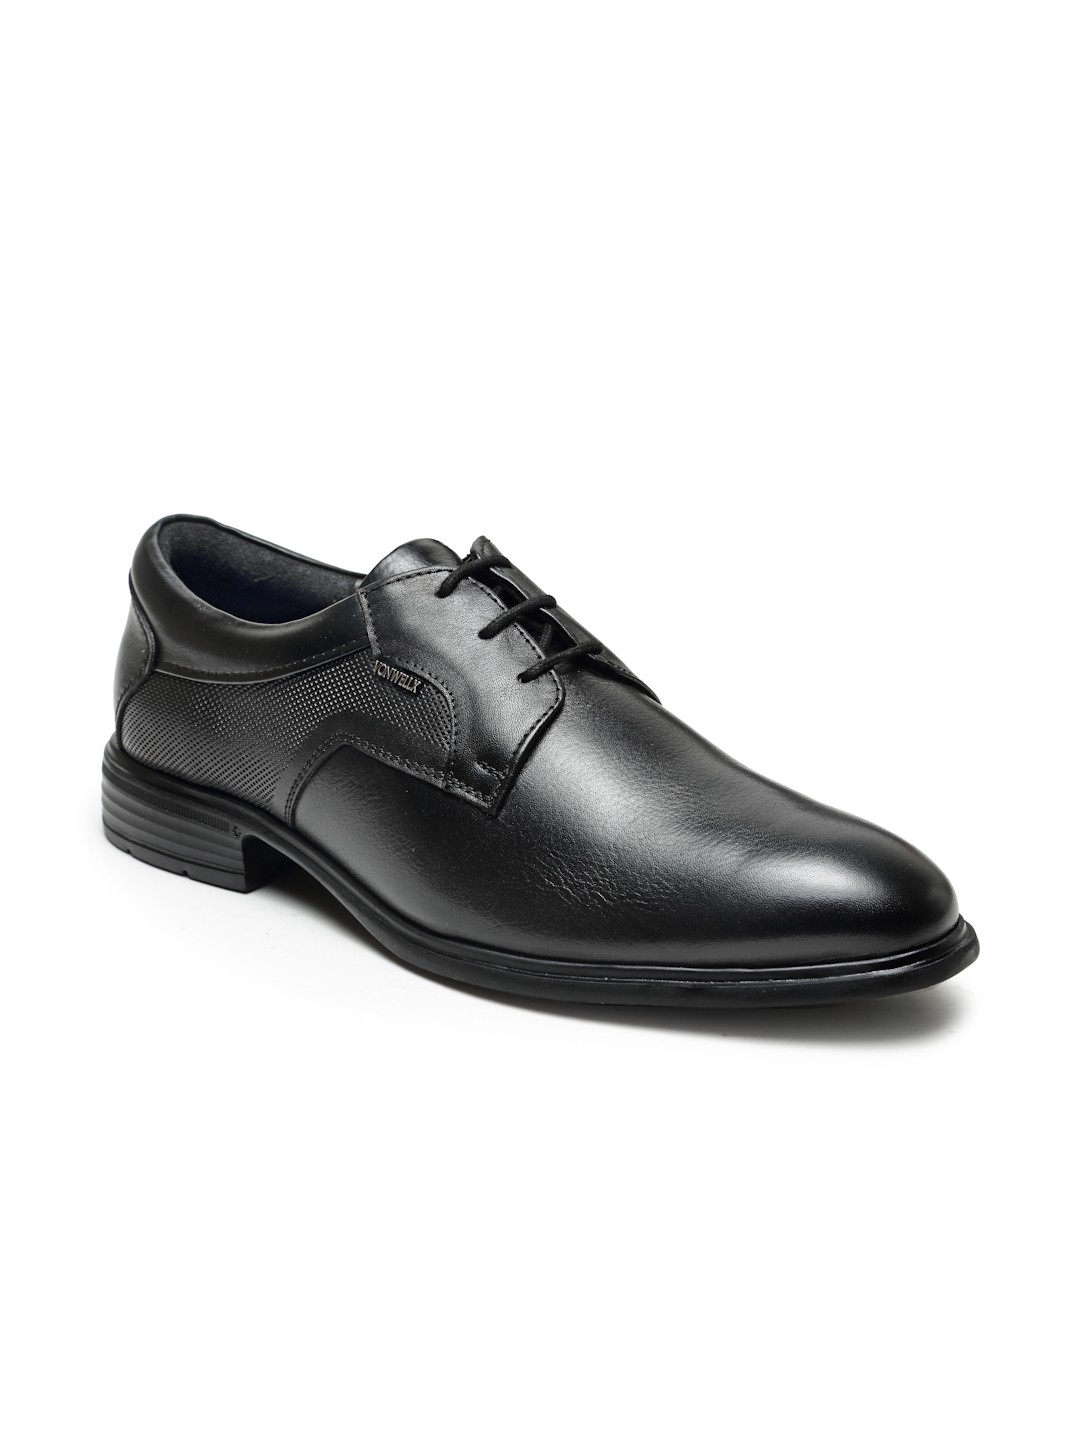 Buy Von Wellx Germany Comfort Men's Black Formal Shoes Adler Online in Faridabad